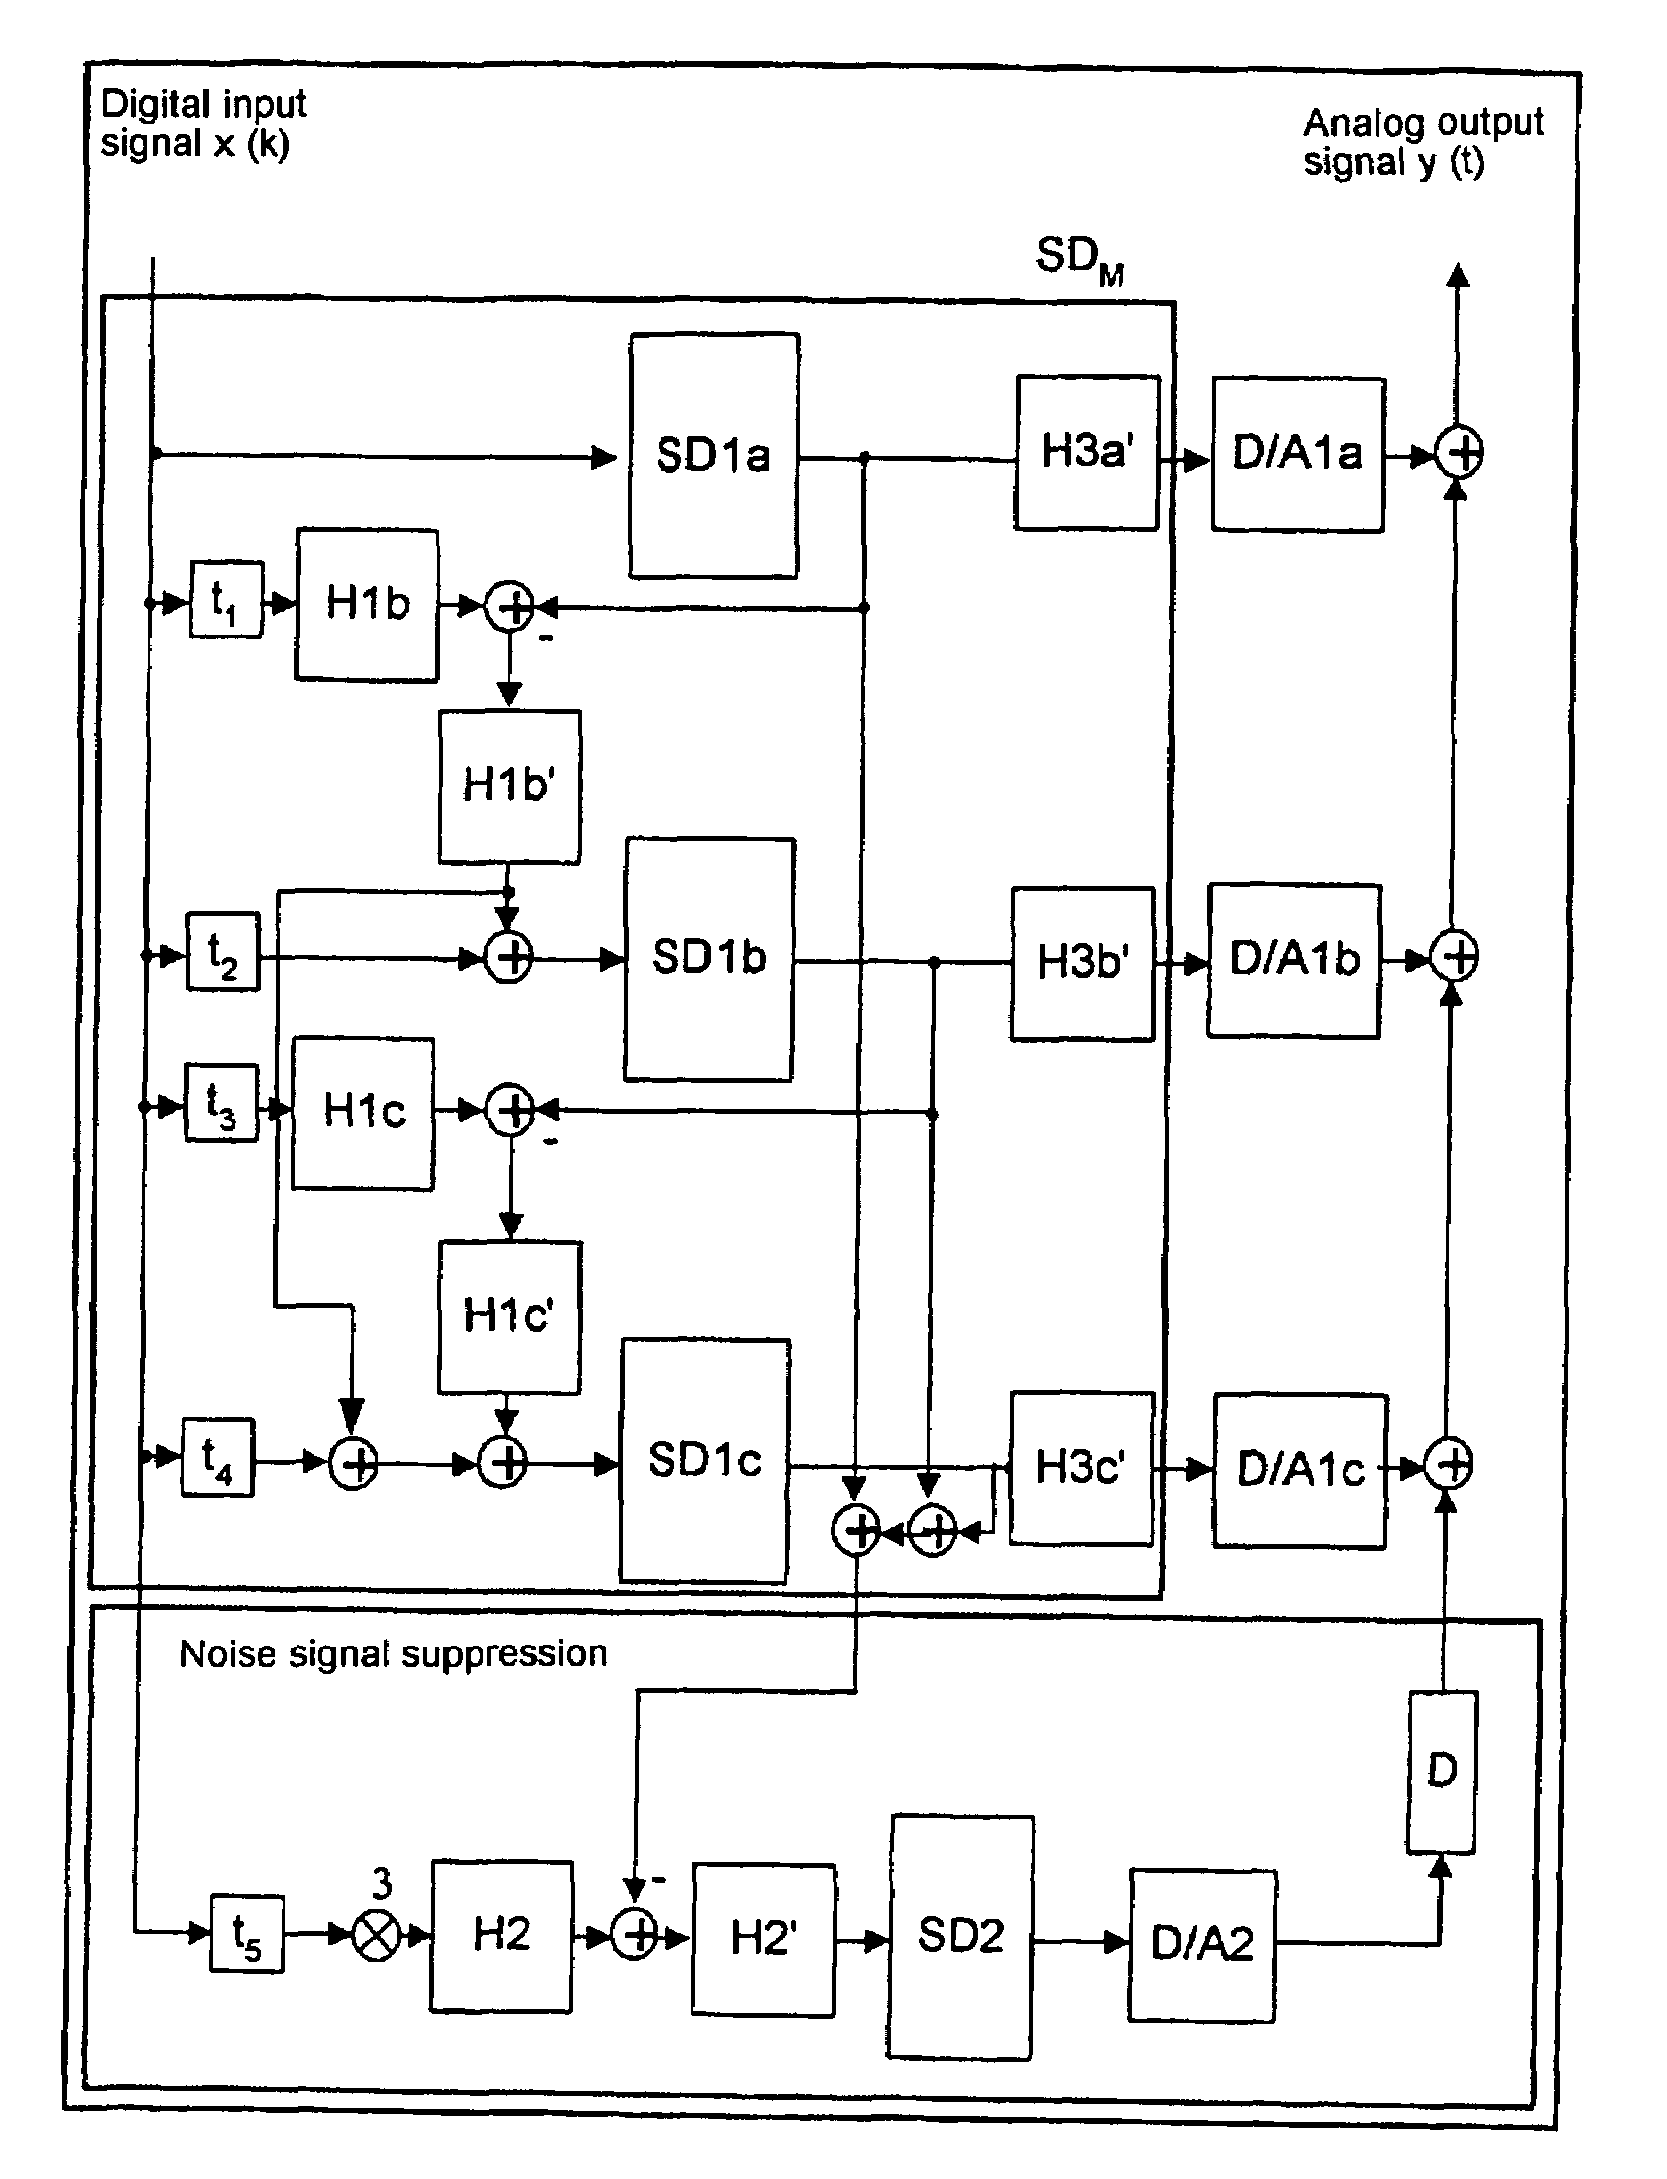 Sigma-delta converter with noise suppression